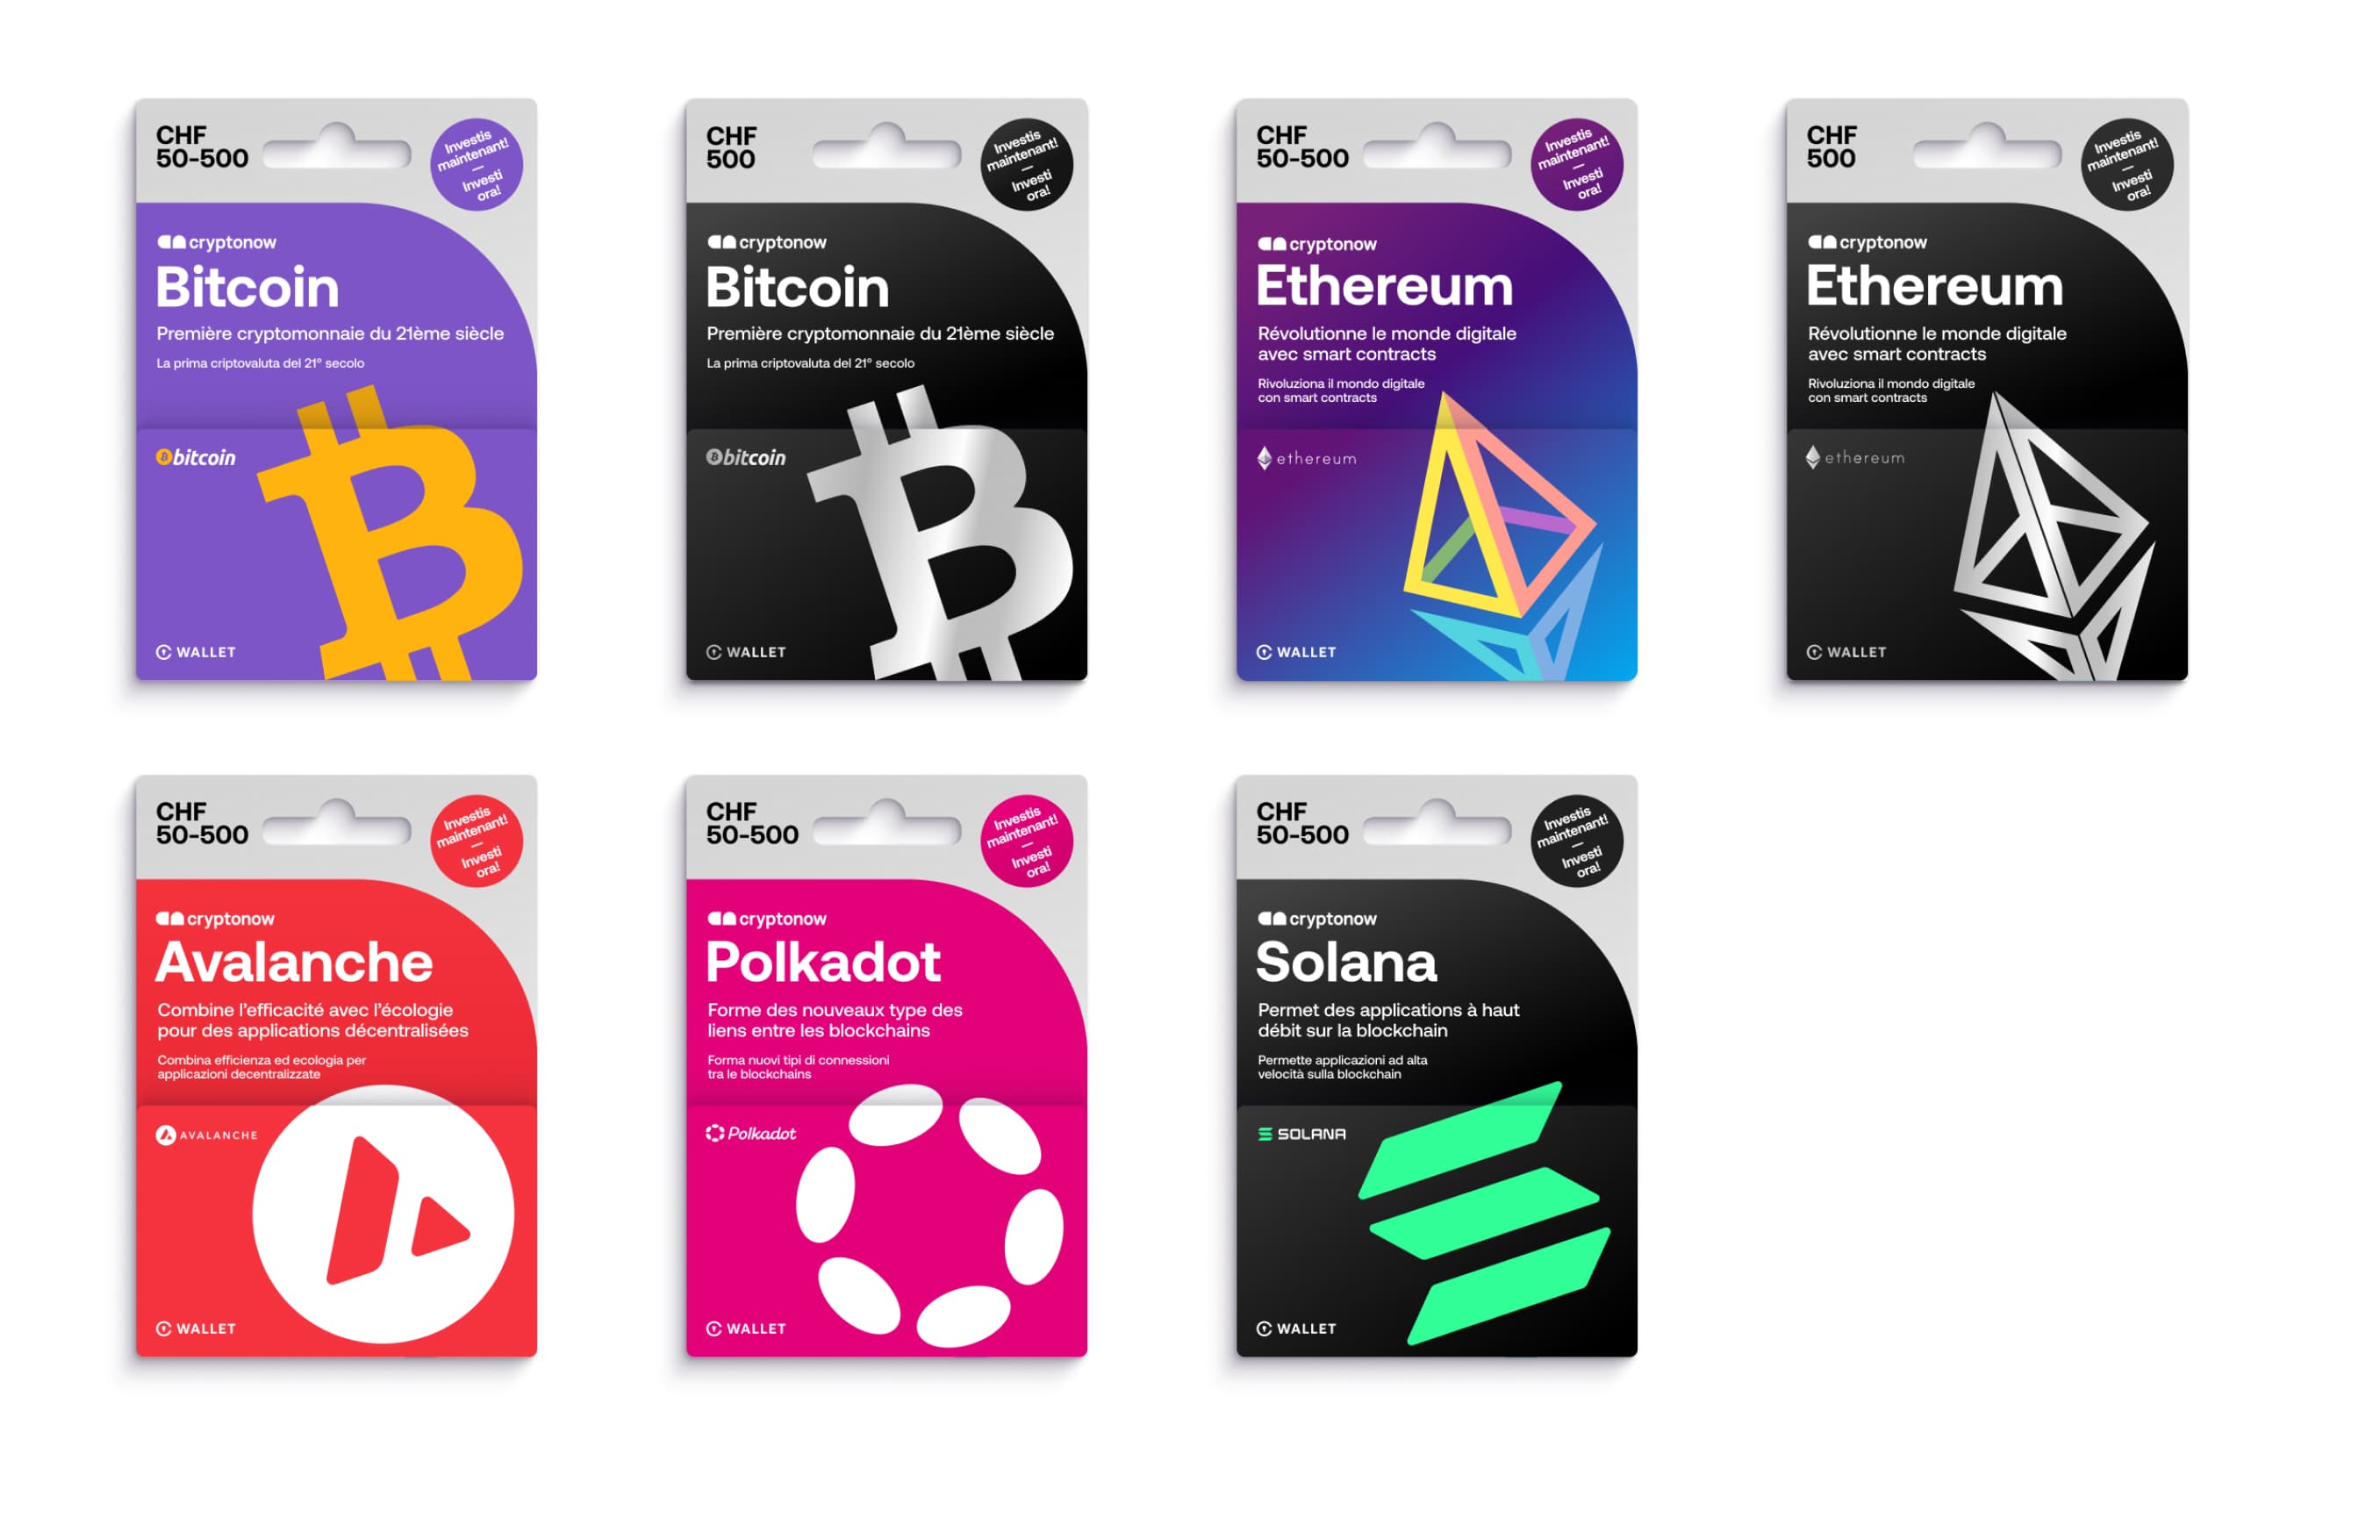 Valute disponibili sulla carta regalo Cryptonow: Bitcoin, Ethereum, Avalanche, Polkadot, Solana